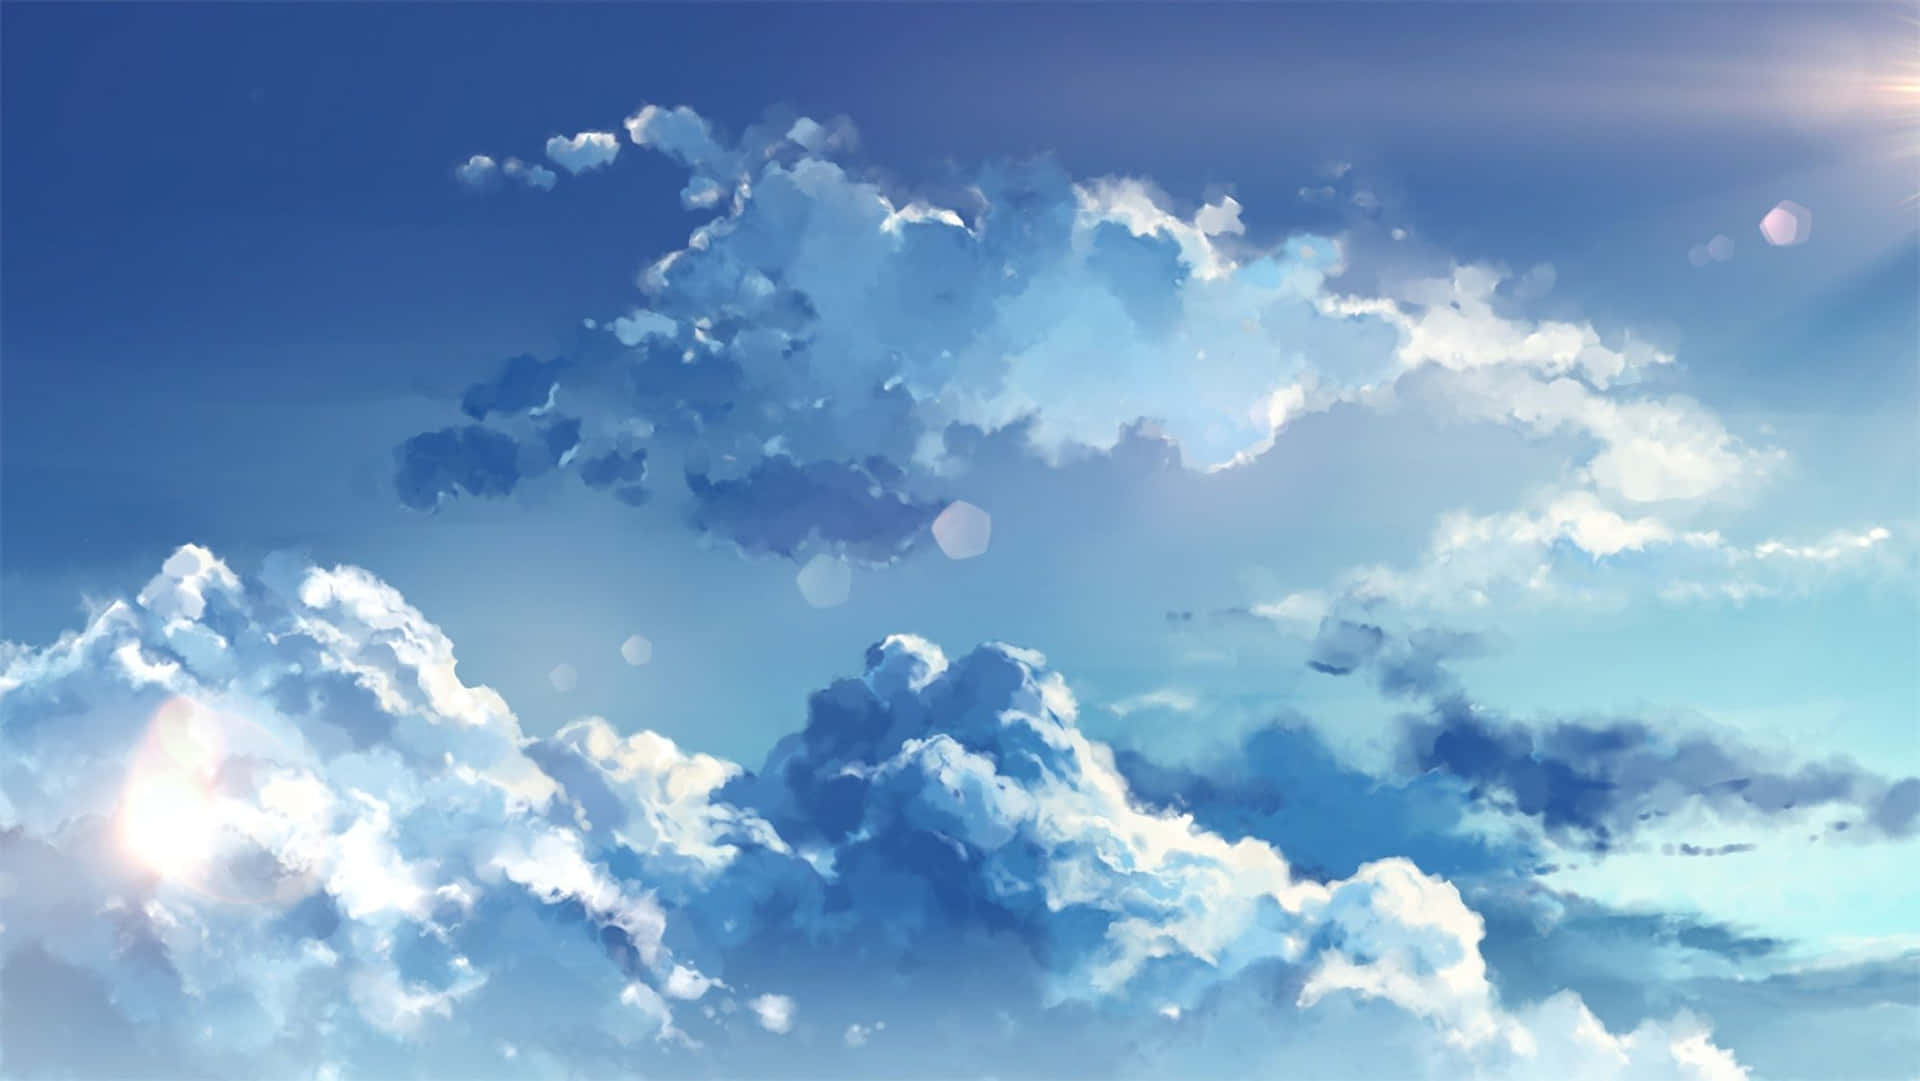 Anime Sky in a Serene Scene Wallpaper